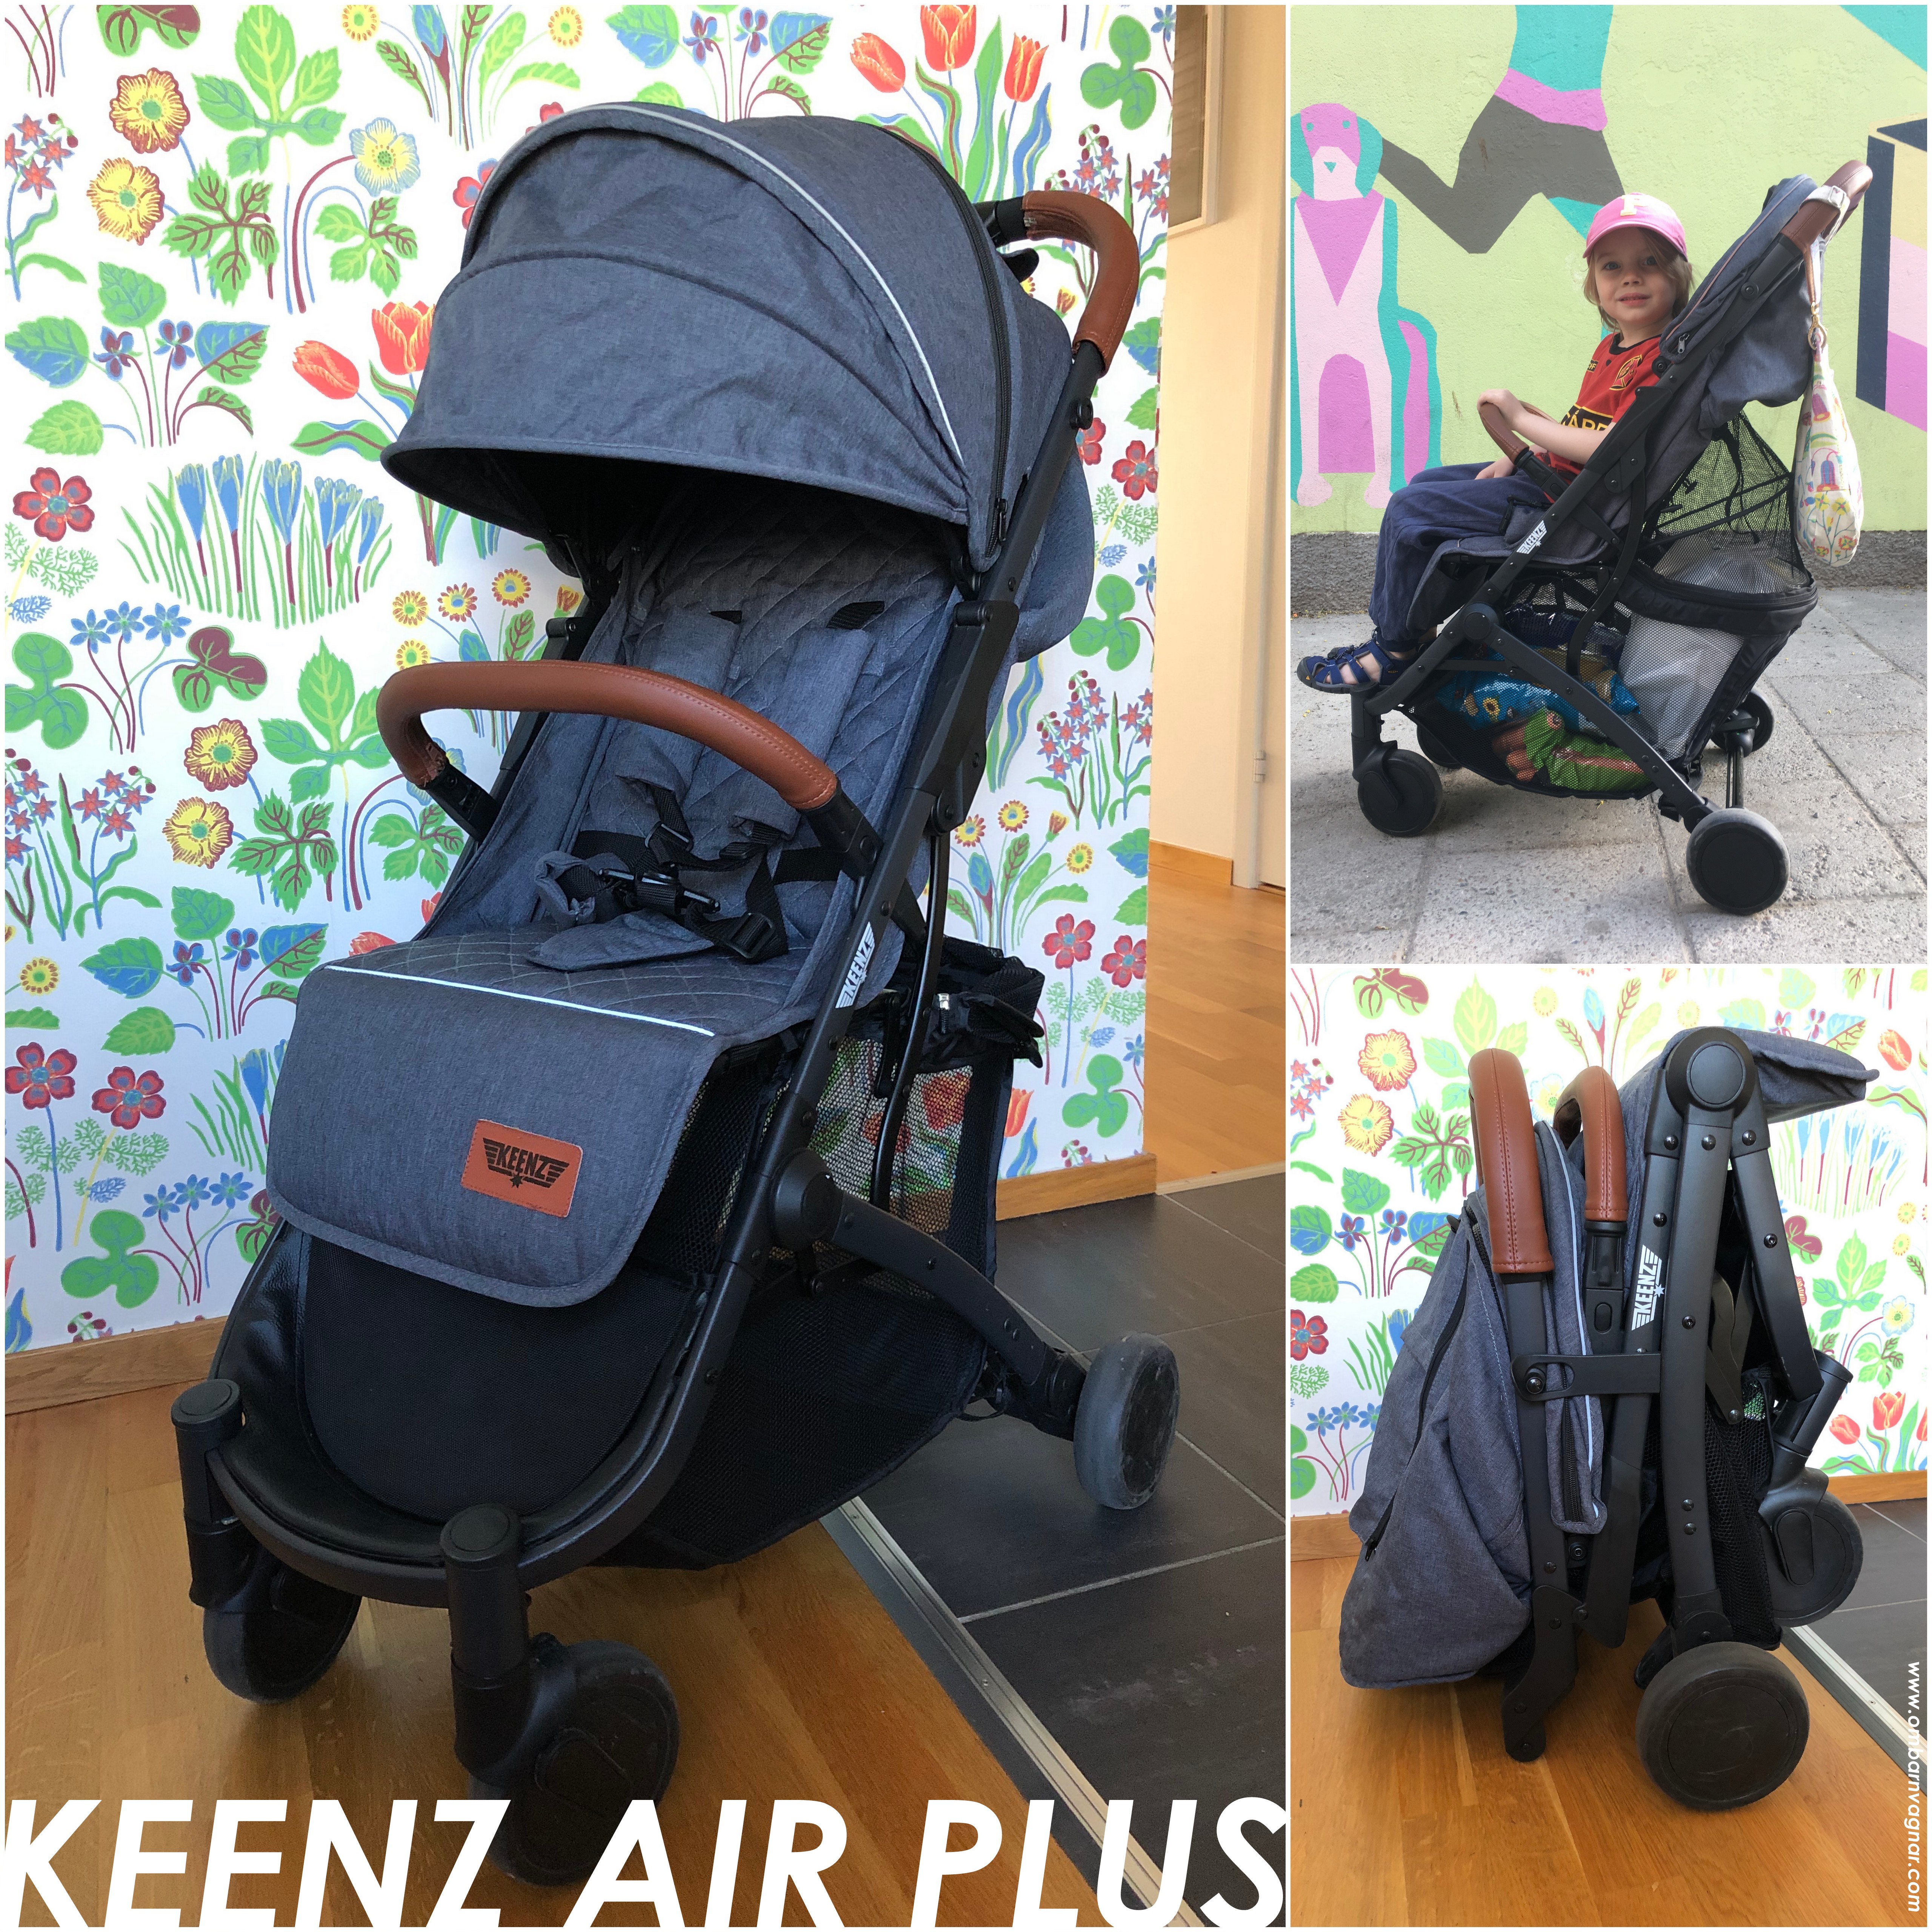 Recension av Keenz Air Plus